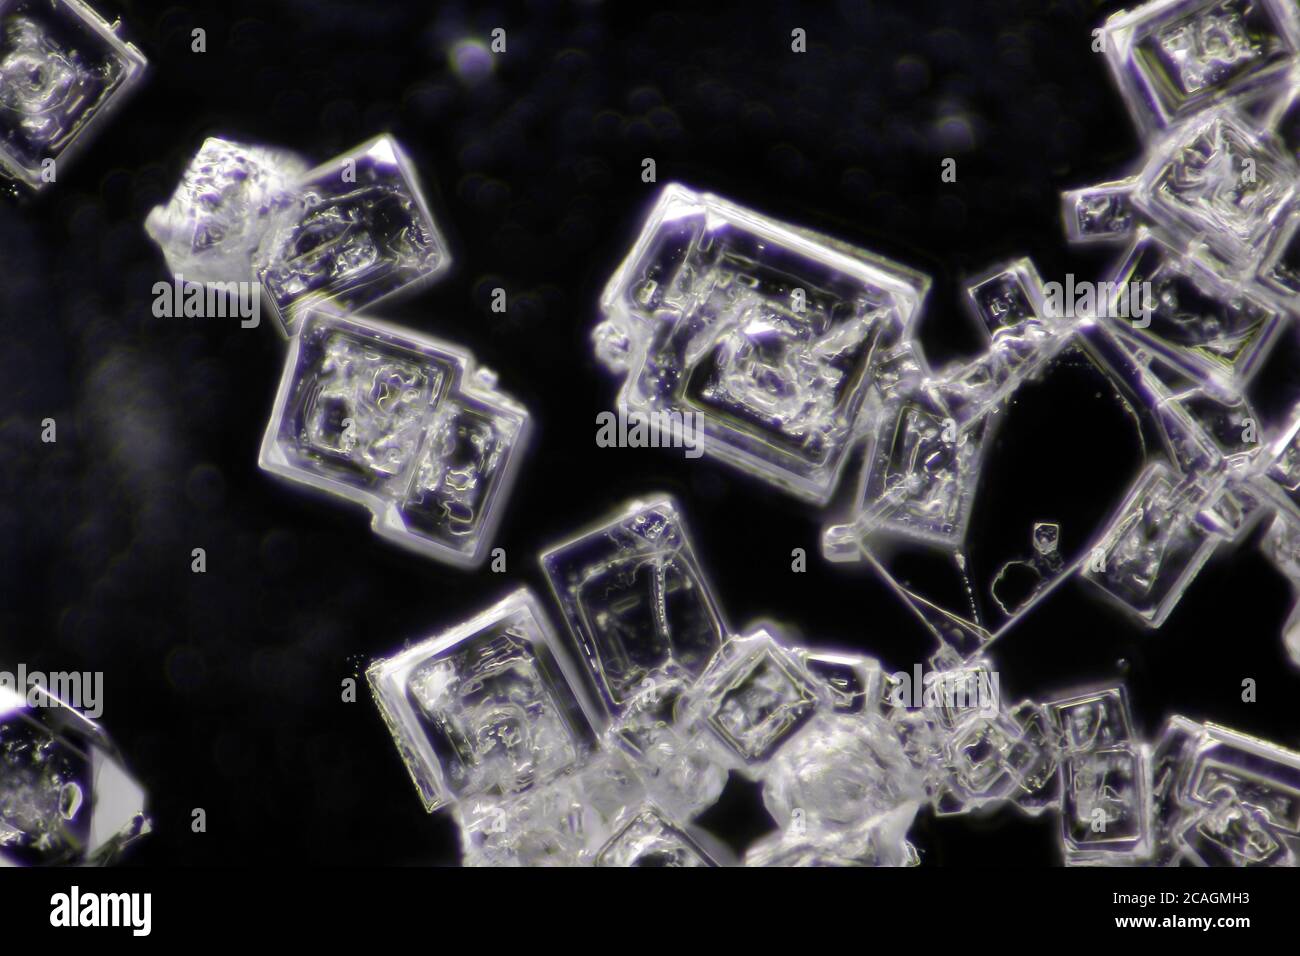 Microscopic view of sodium chloride crystals. Darkfield illumination. Stock Photo